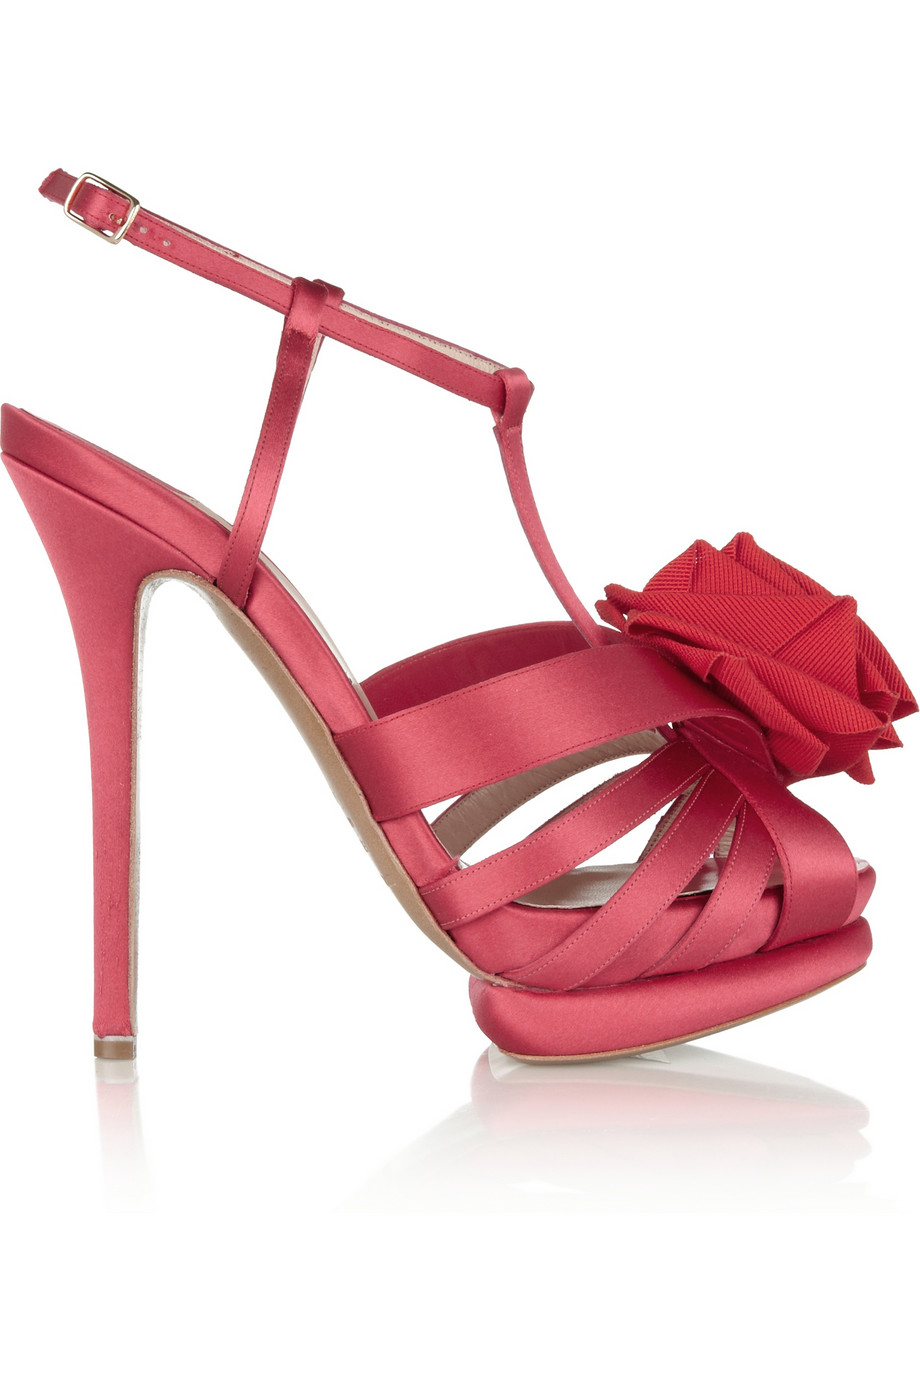 Lyst - Nicholas kirkwood Satin Sandals in Pink